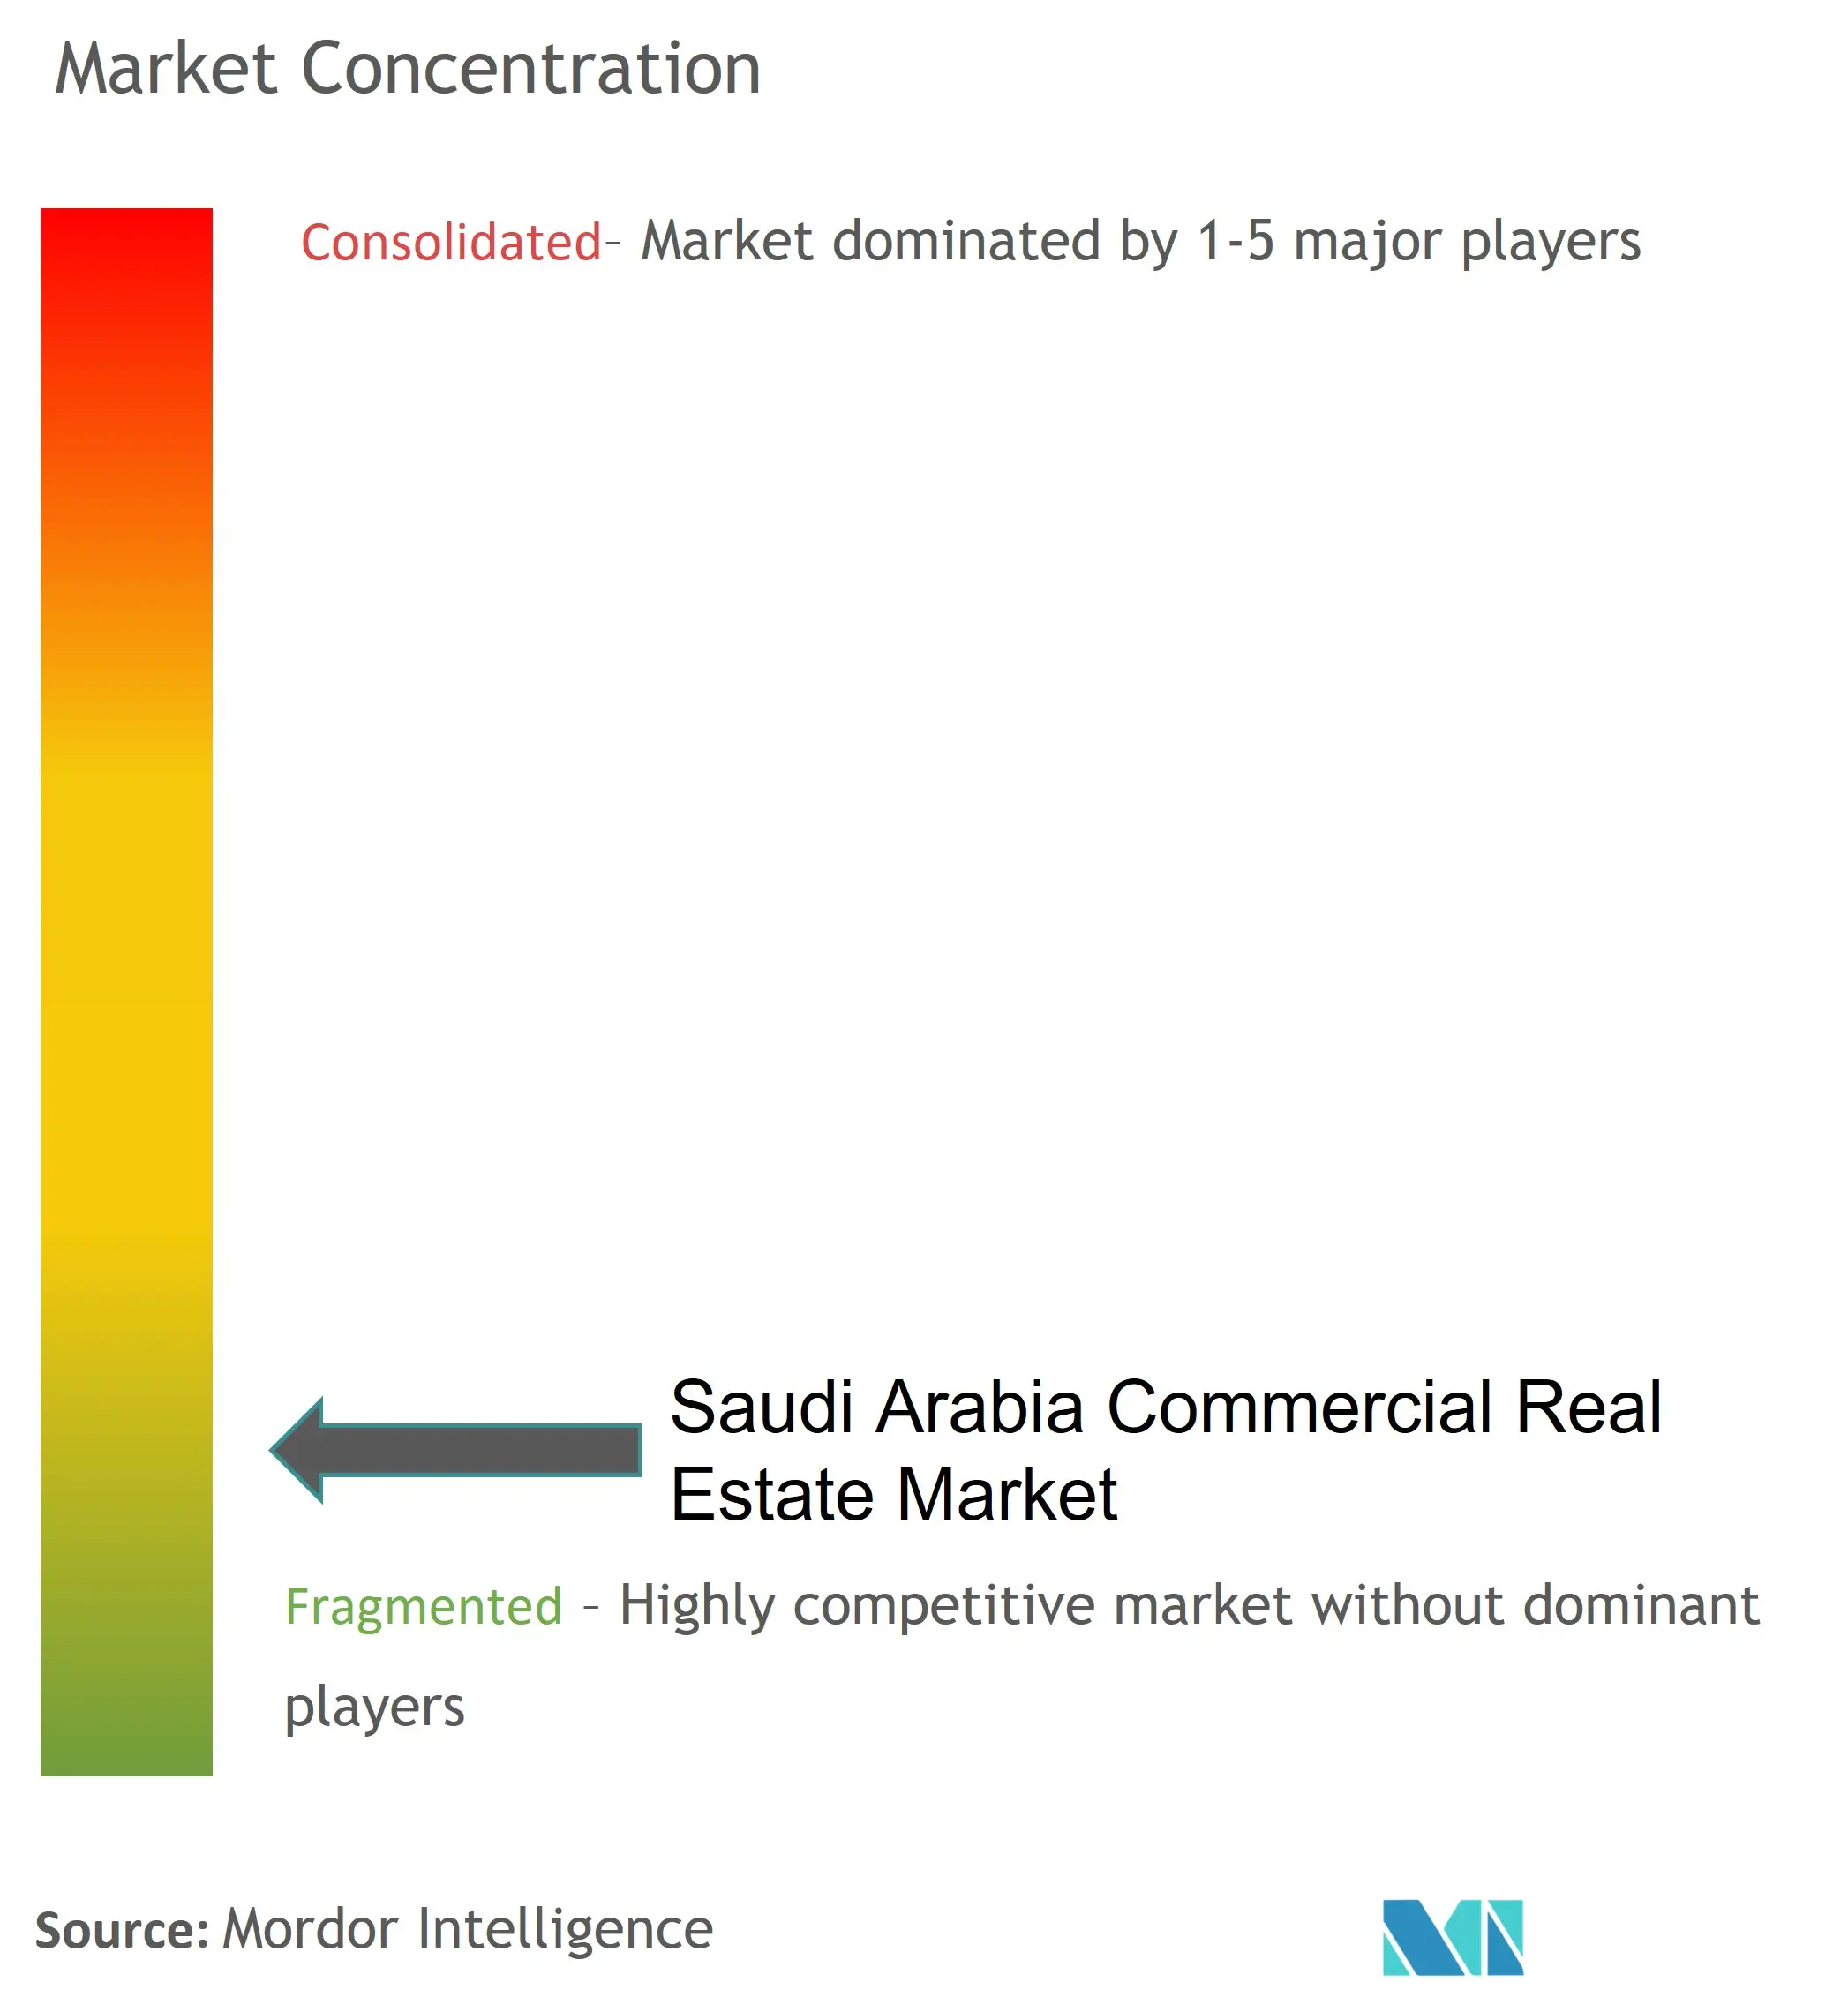 Saudi Arabia Commercial Real Estate Market Concentration